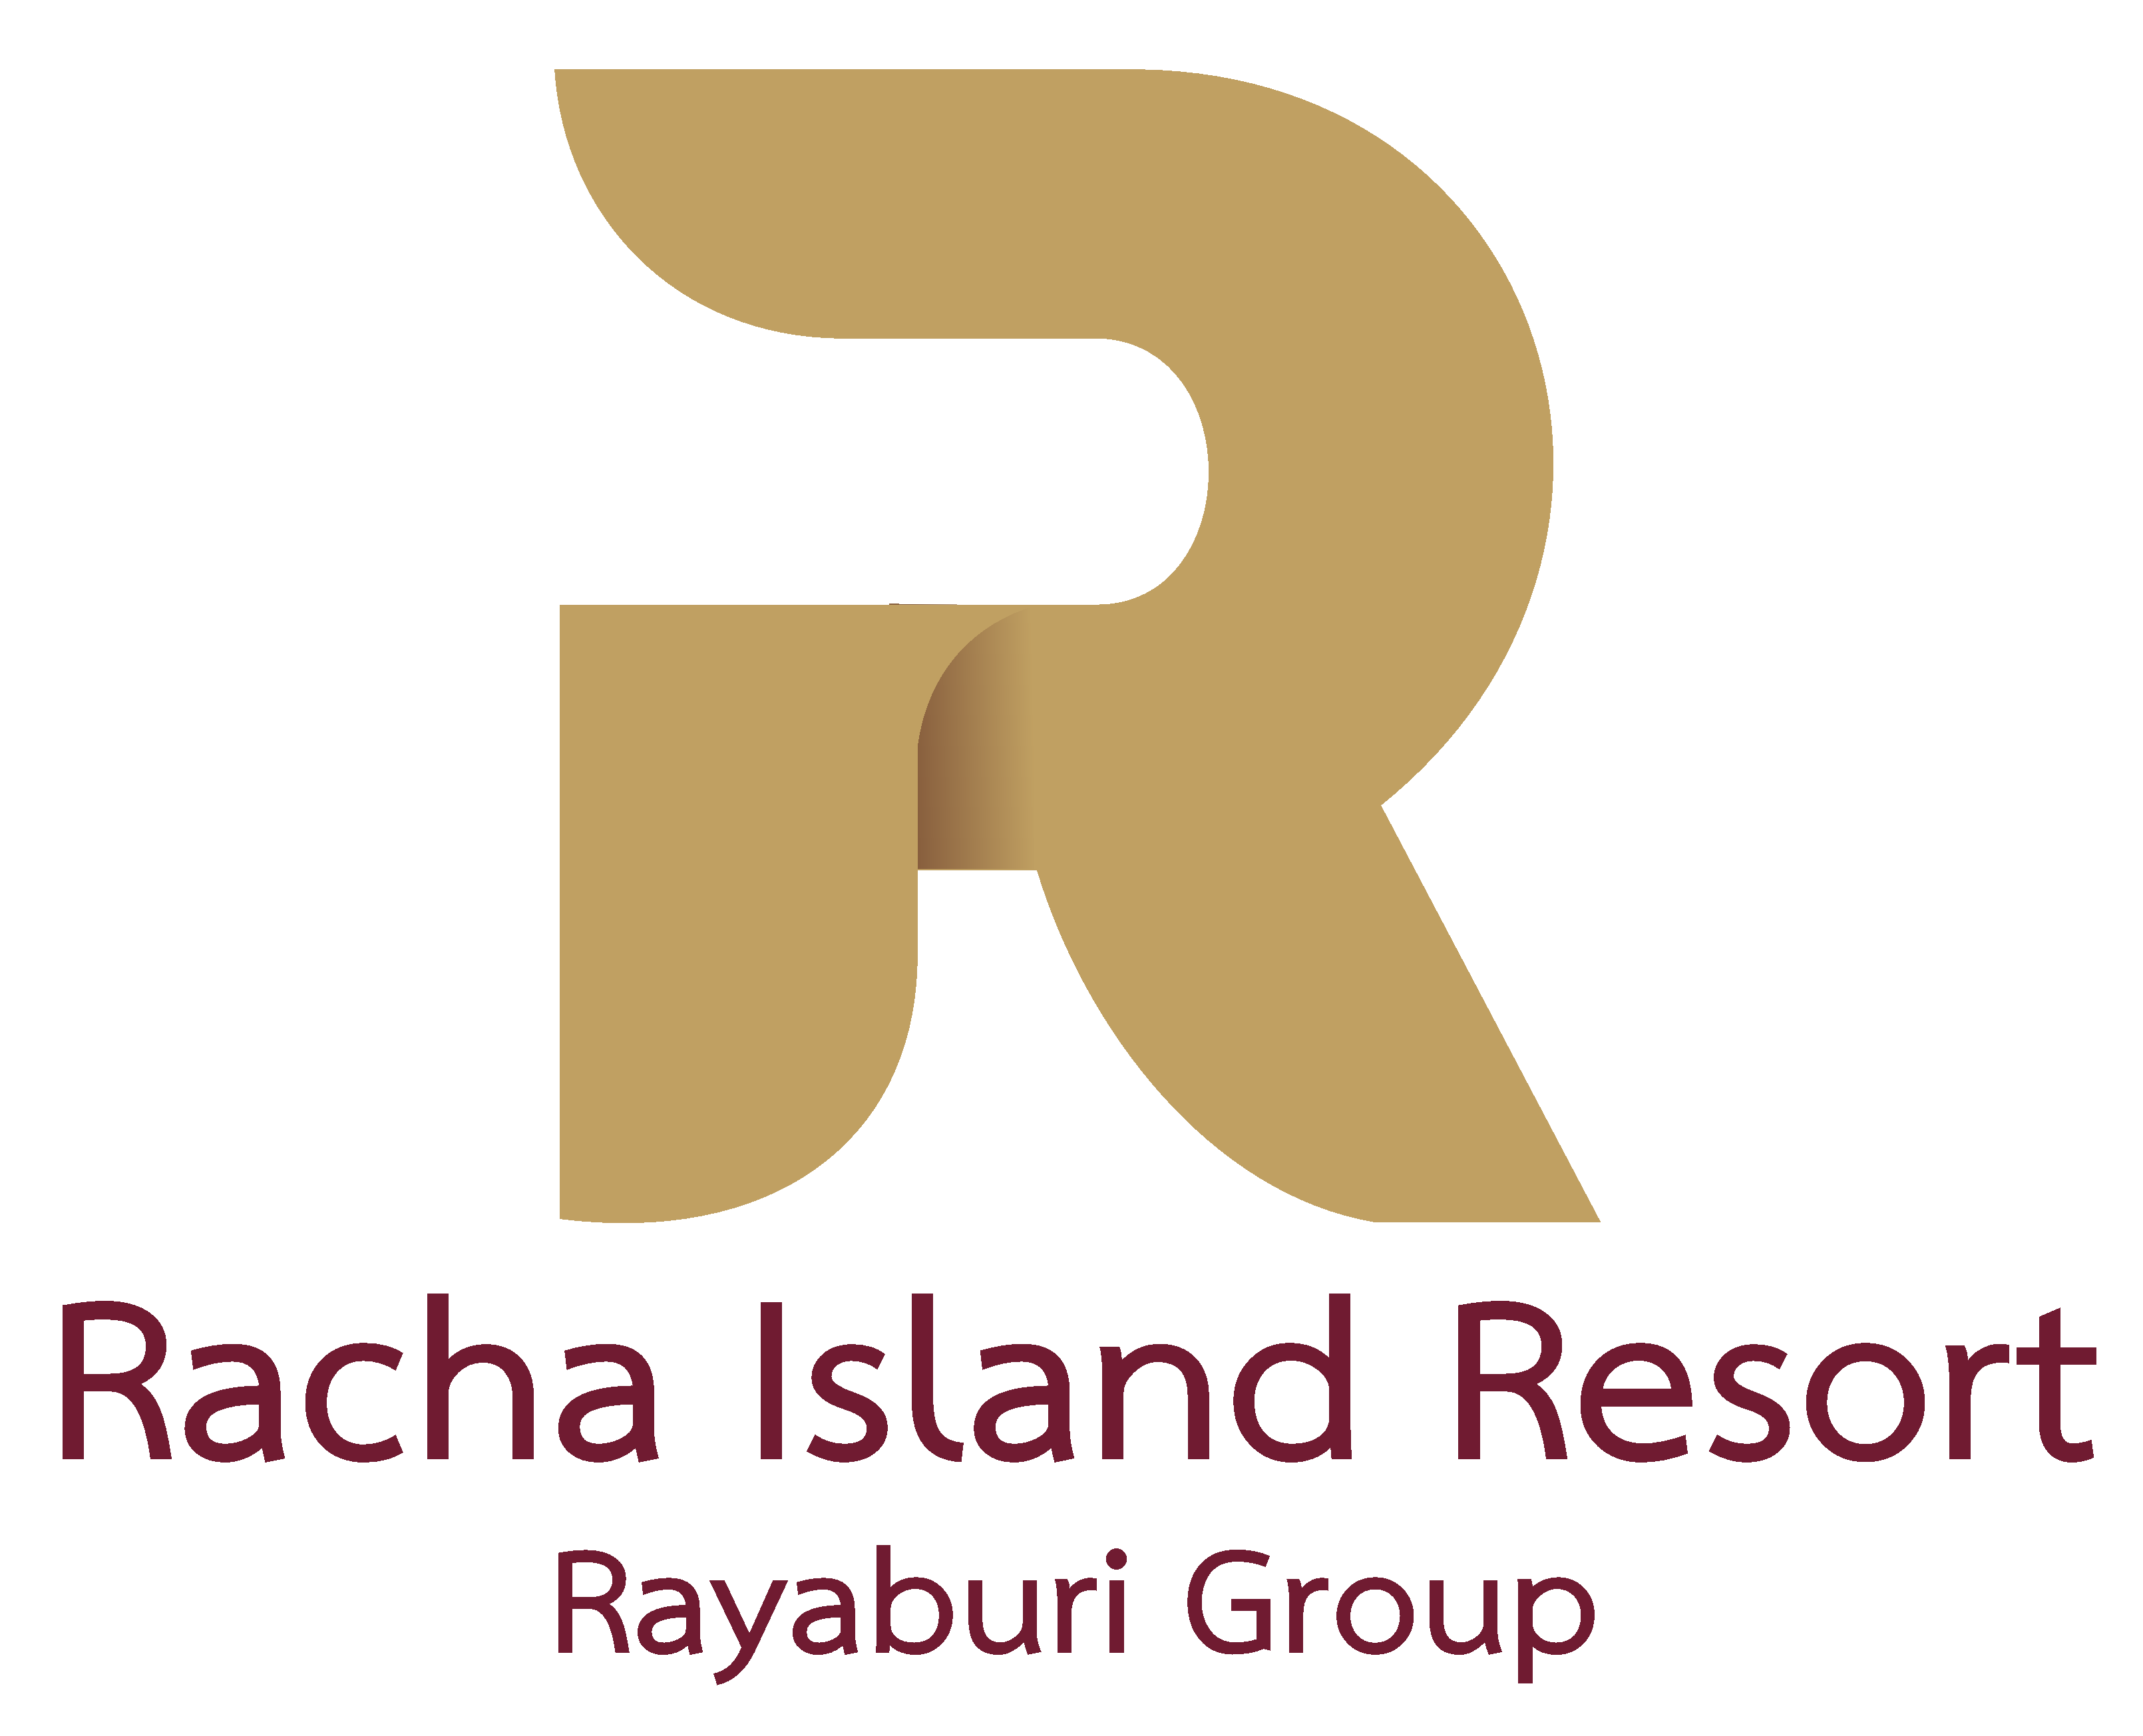 Racha Island Resort by Rayaburi Group